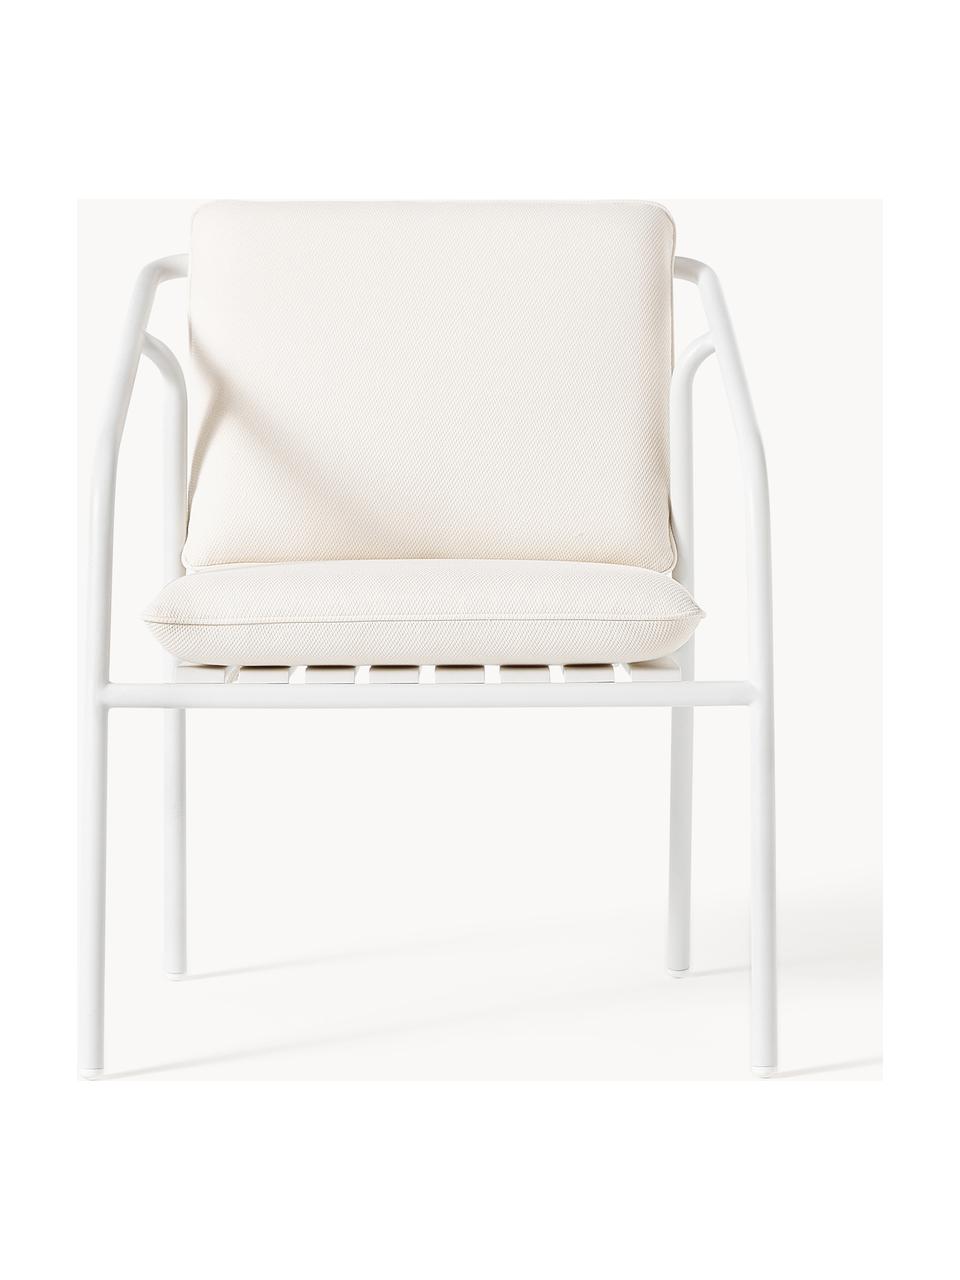 Zahradní židle s područkami Caio, Tlumeně bílá, bílá, Š 69 cm, V 60 cm